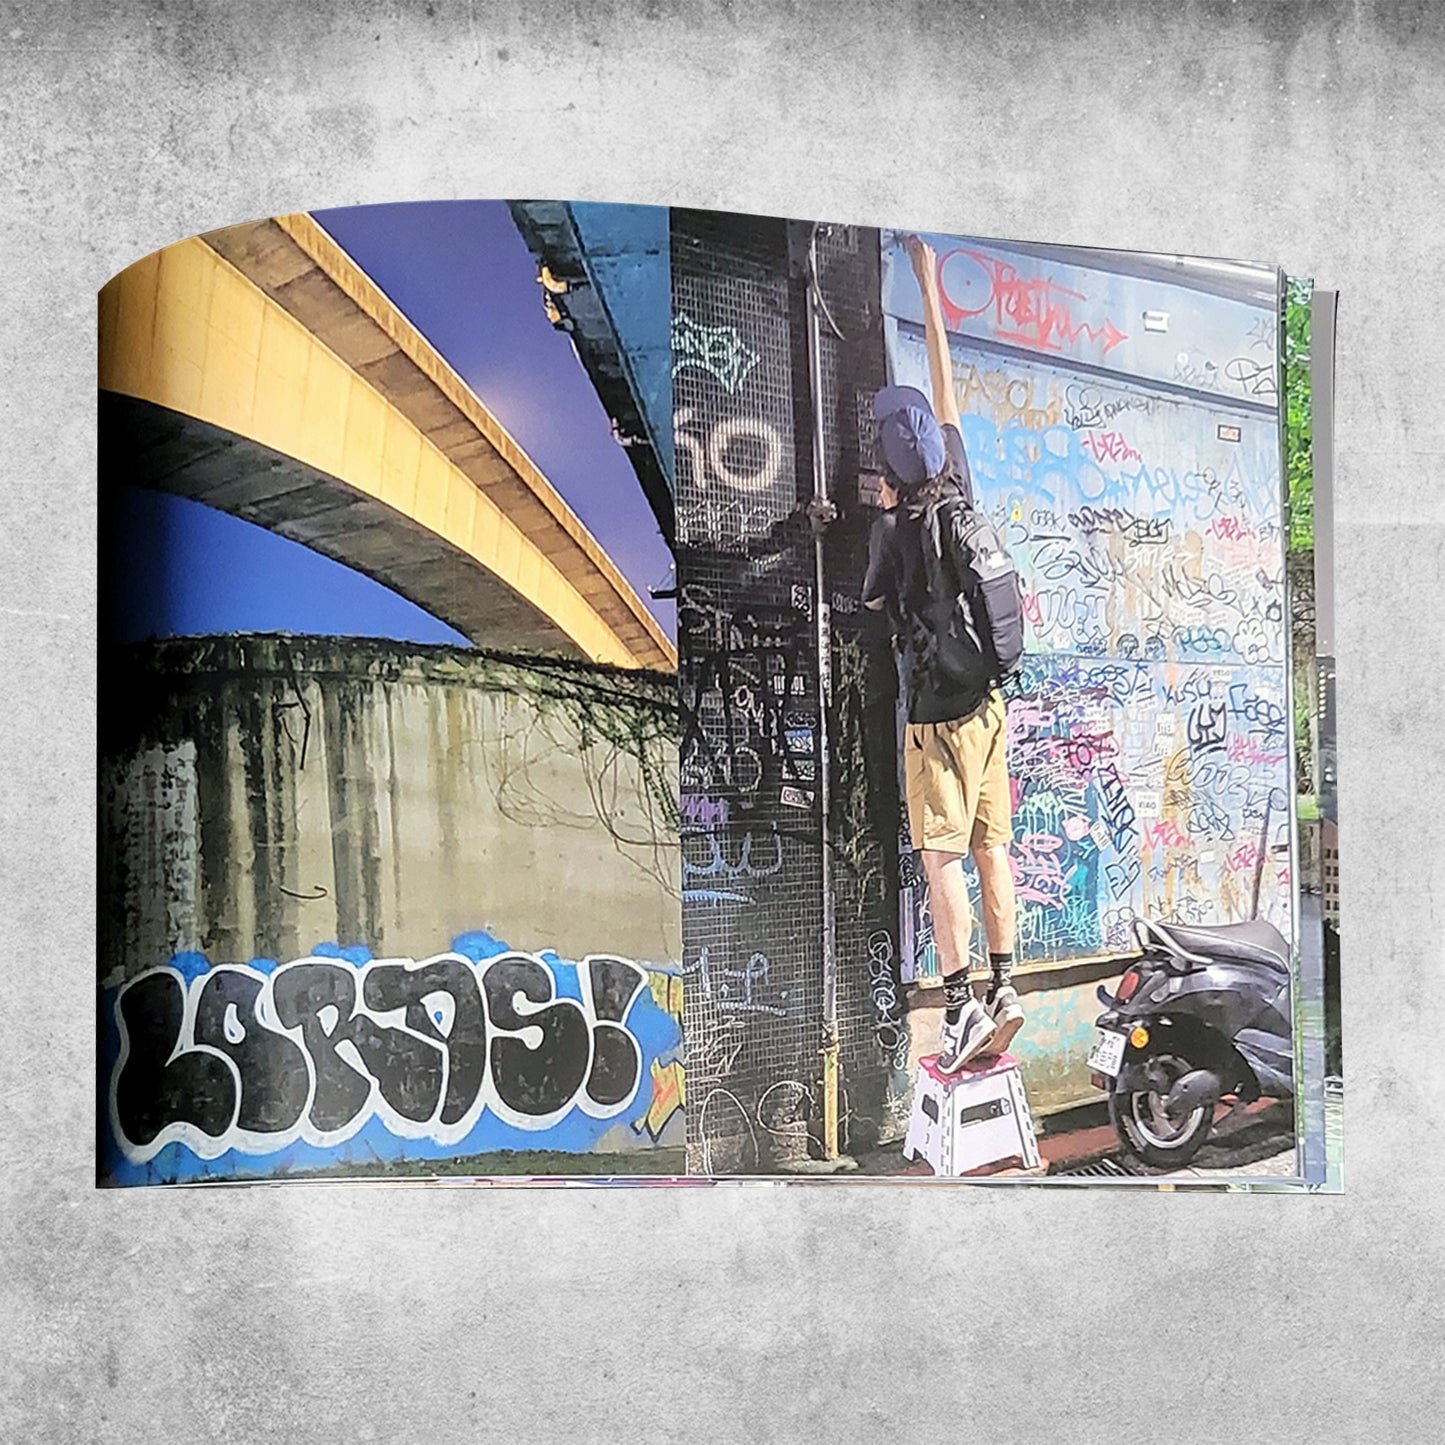 Self published graffiti magazine/zine with graff photography taken by artist overt page 3.